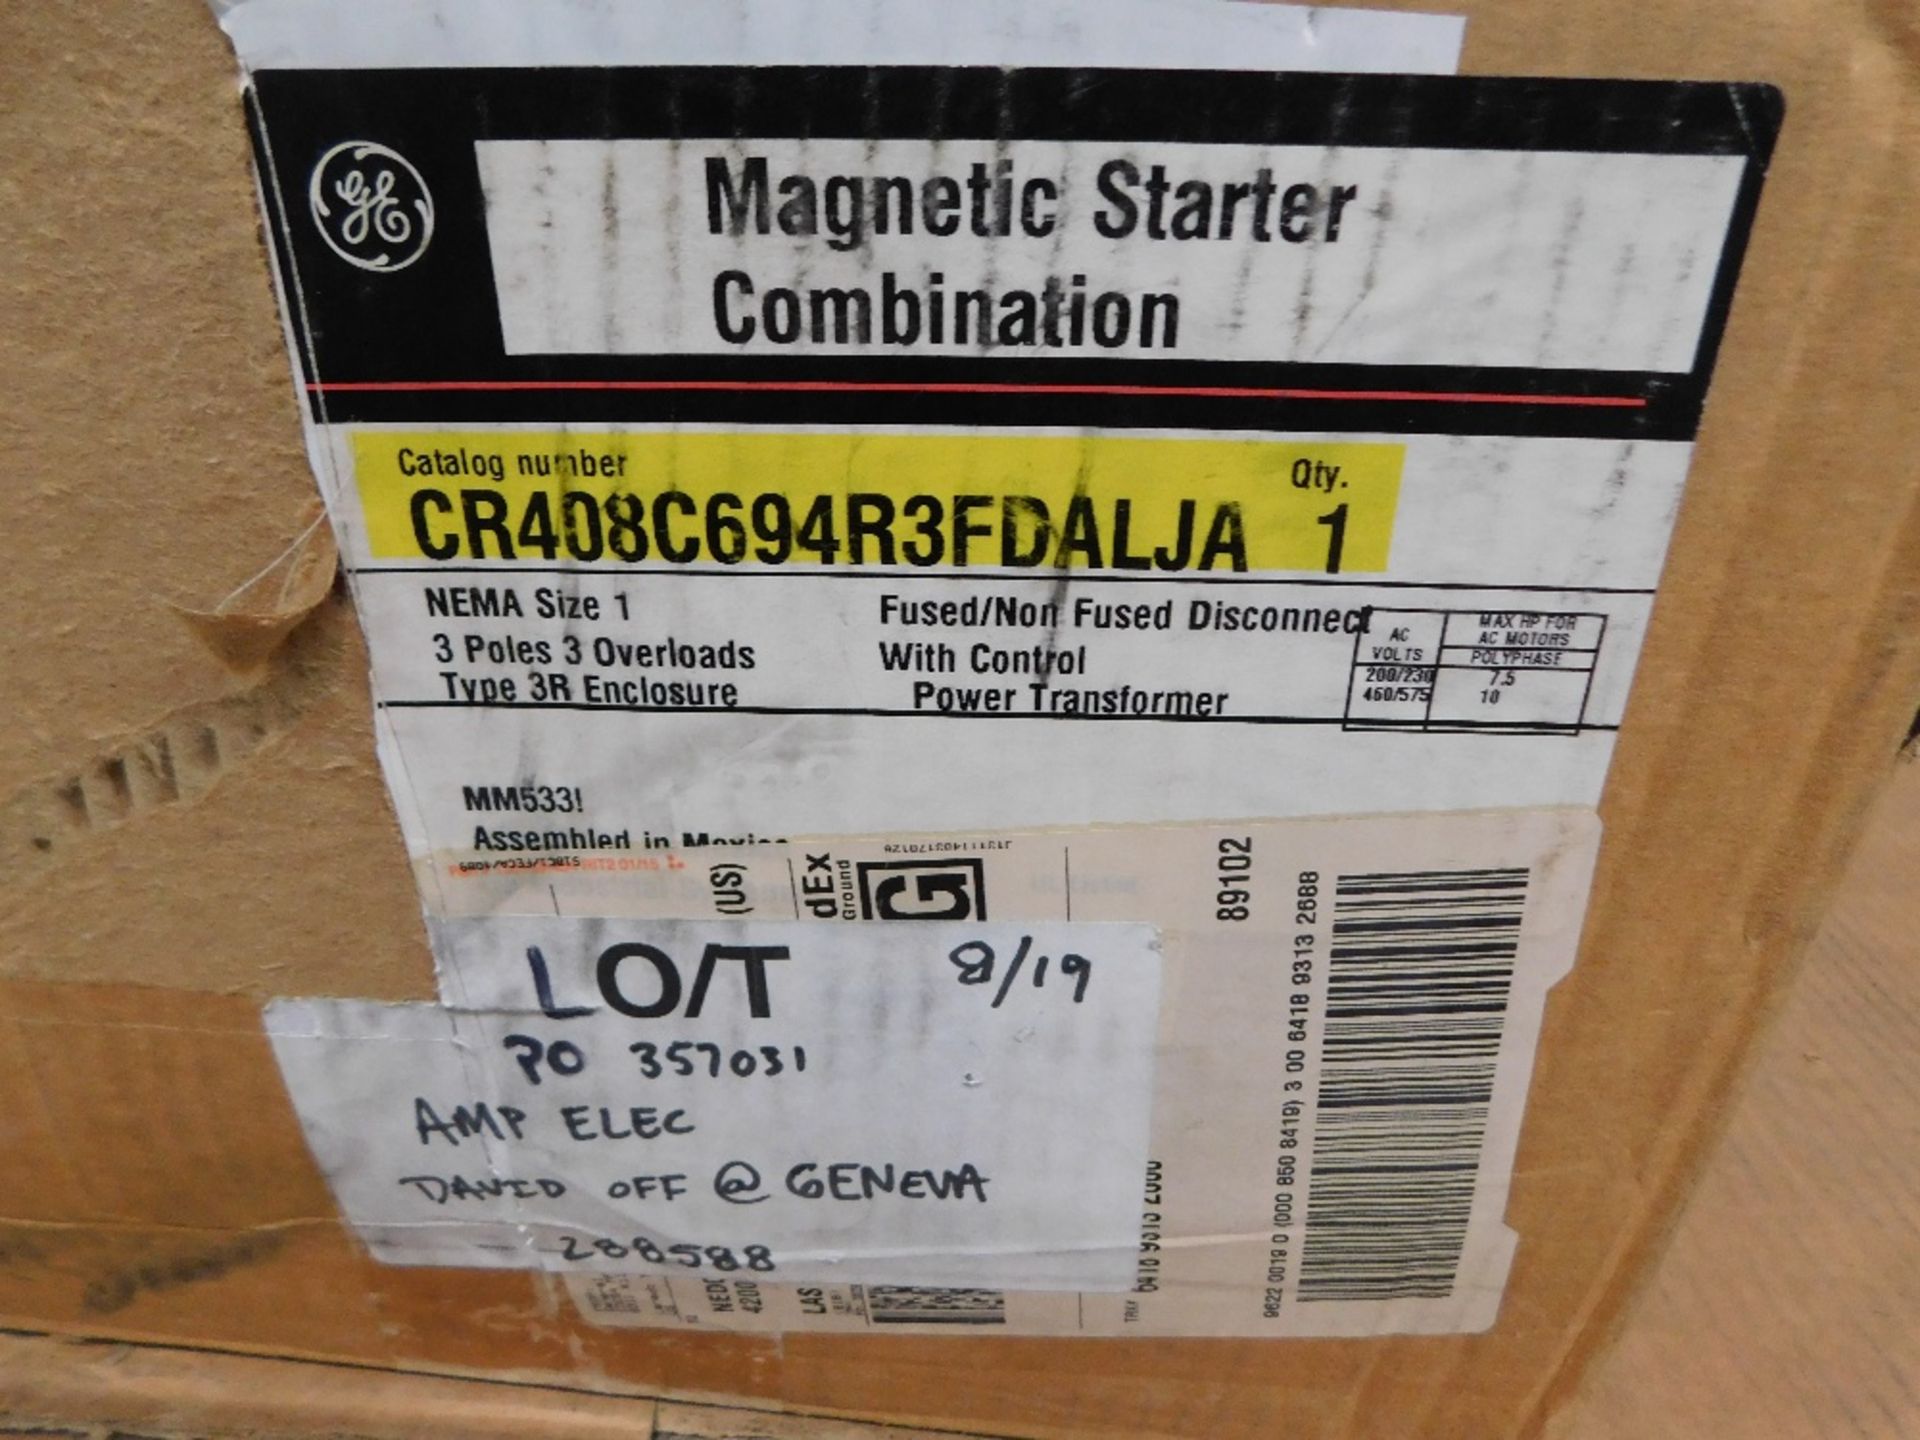 1x Unused Surplus CR408C694R3FDALJA Combination Starters Magnetic Starter 3P 7.5HP NEMA 3R NEMA Size